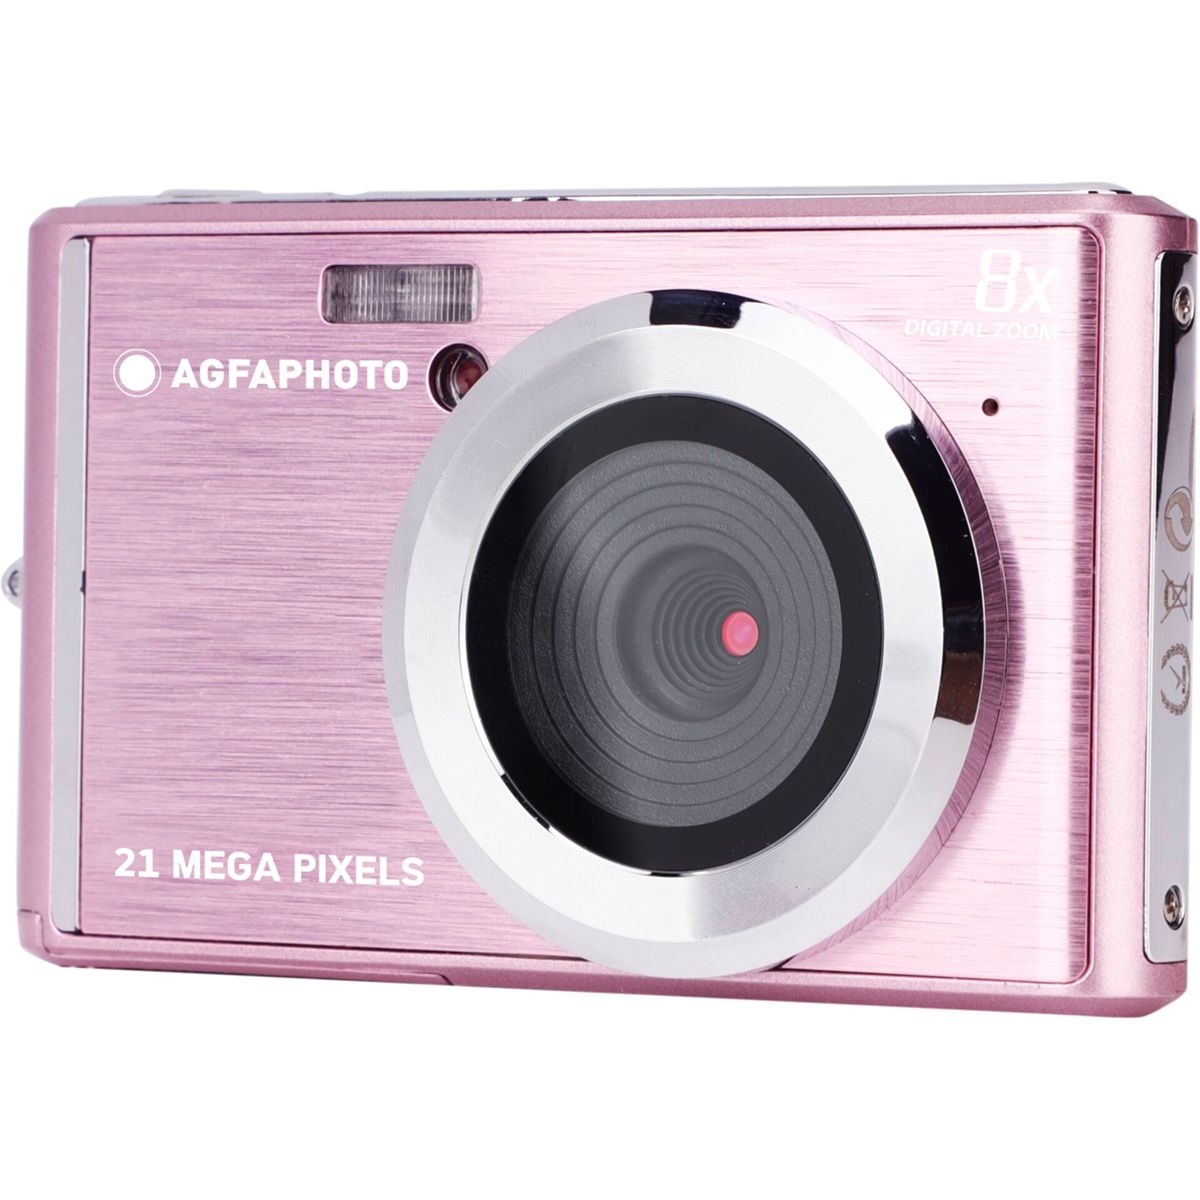 pink DC5200 Cam Digitalkamera pink AGFAPHOTO Compact